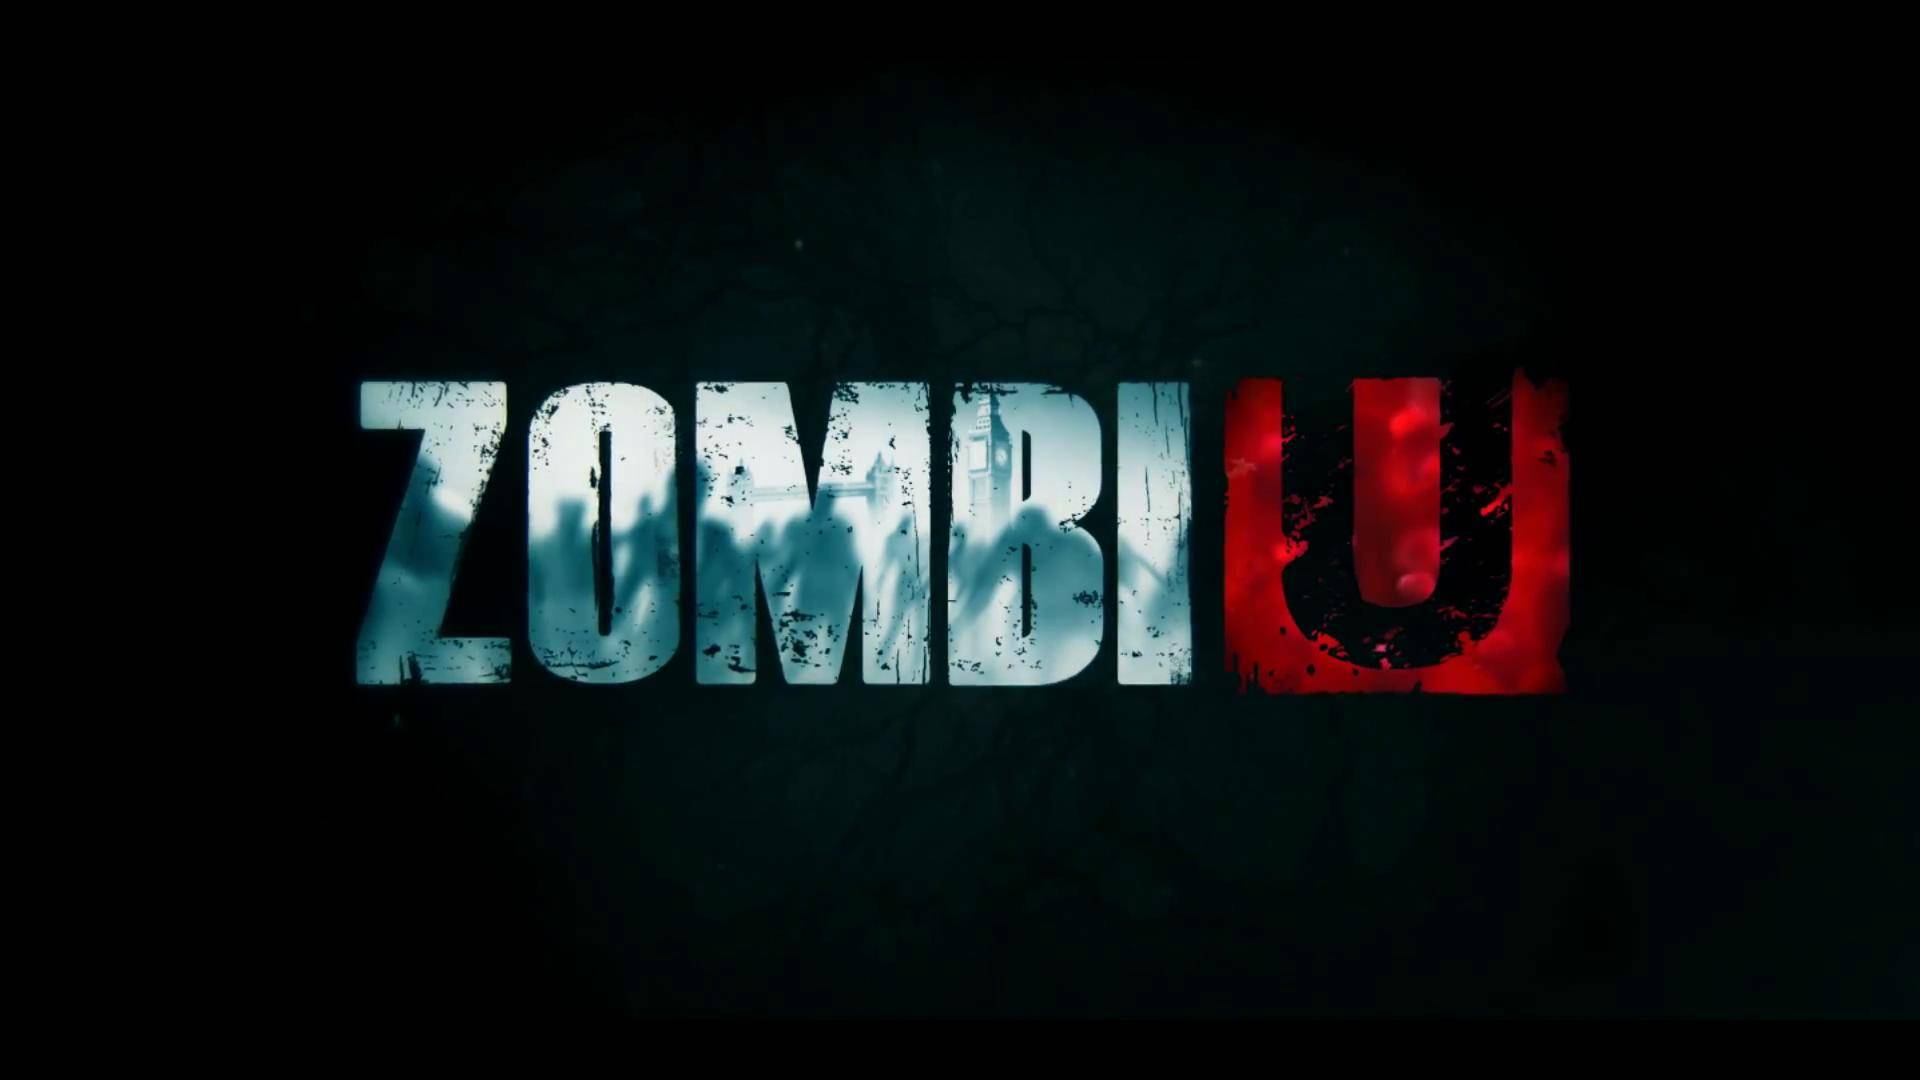 Zombiu Wallpaper In HD Gamingbolt Video Game News Res